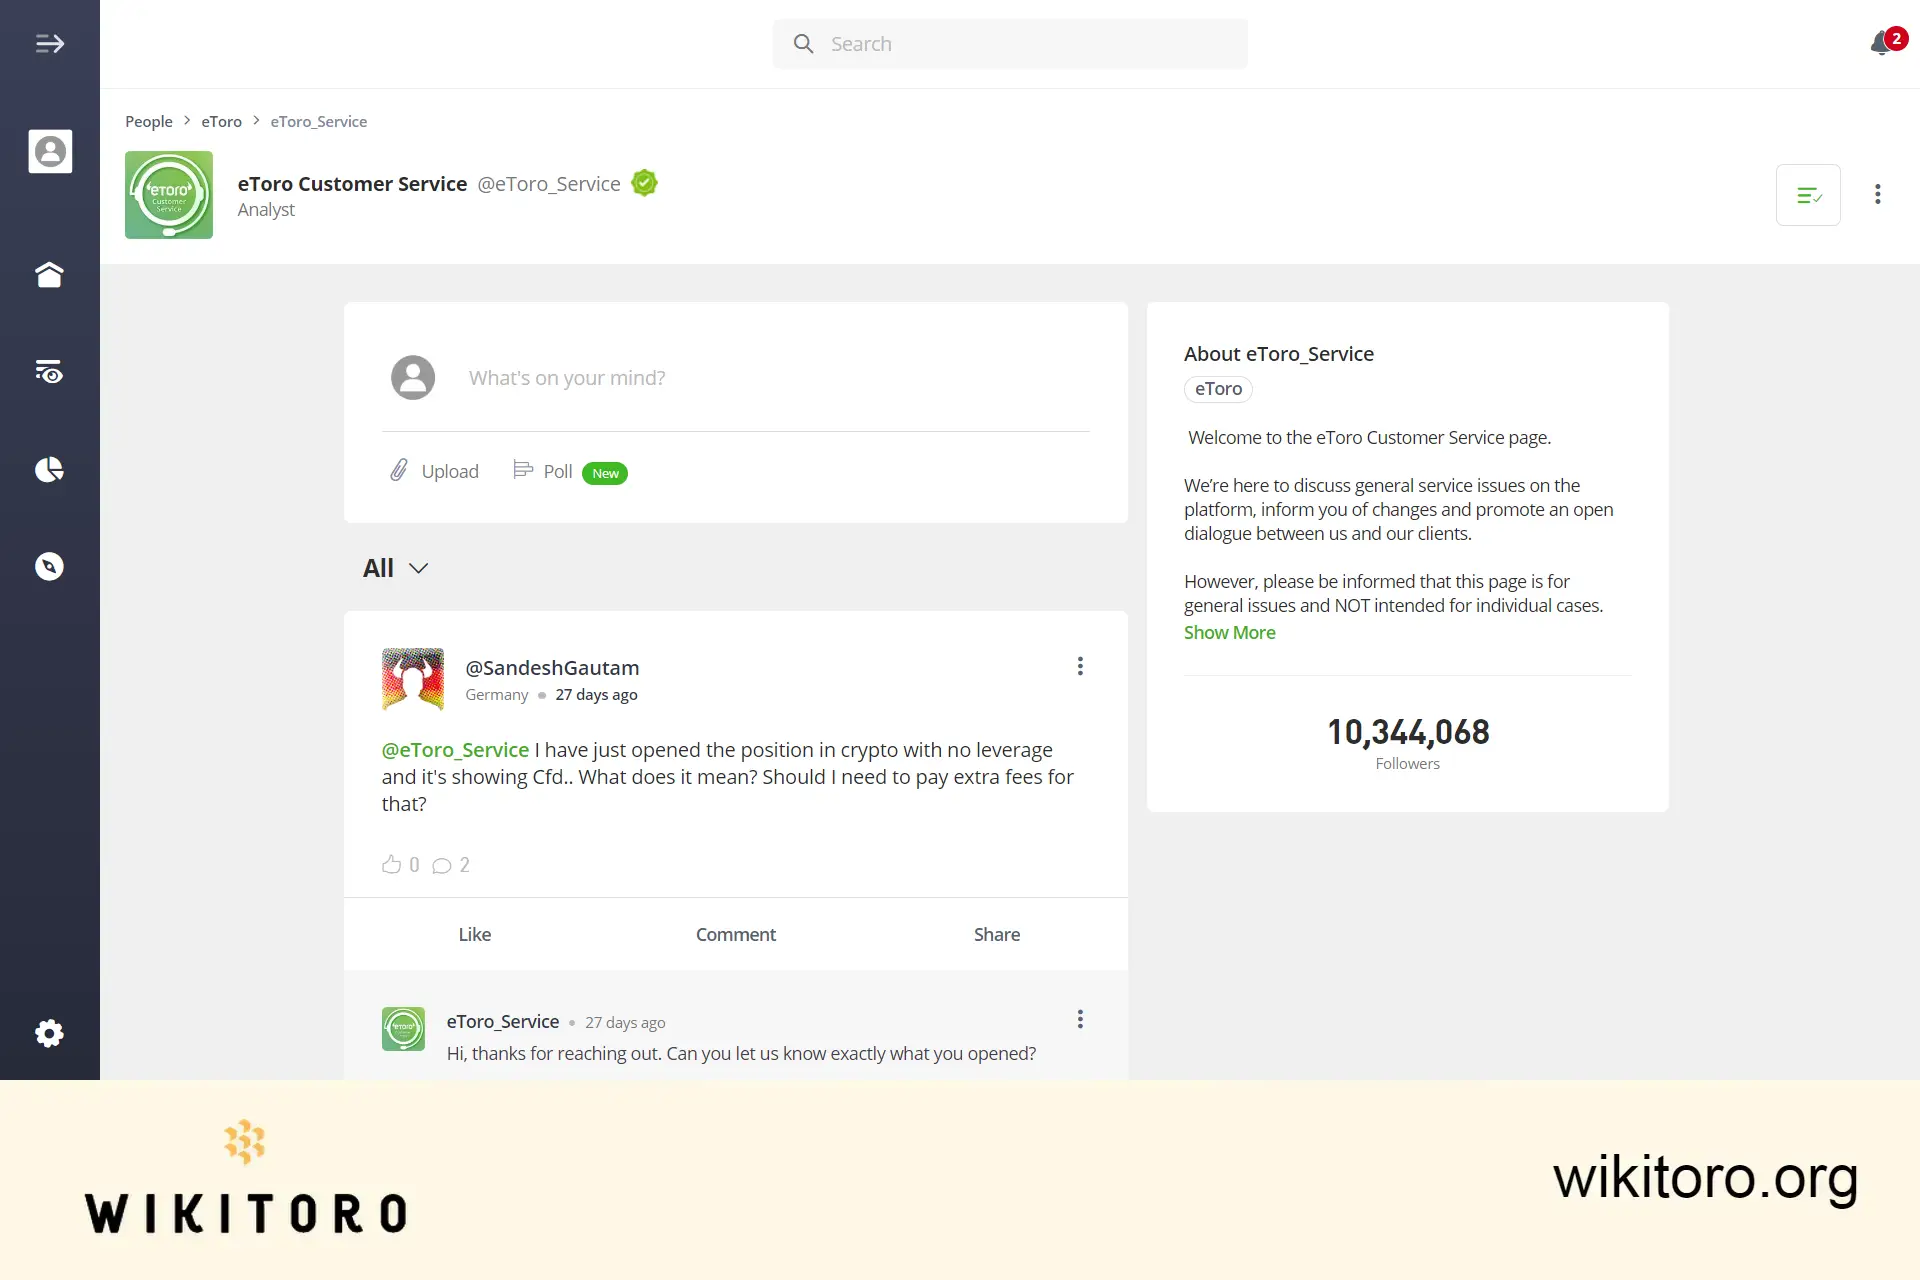 eToro_Service user profile